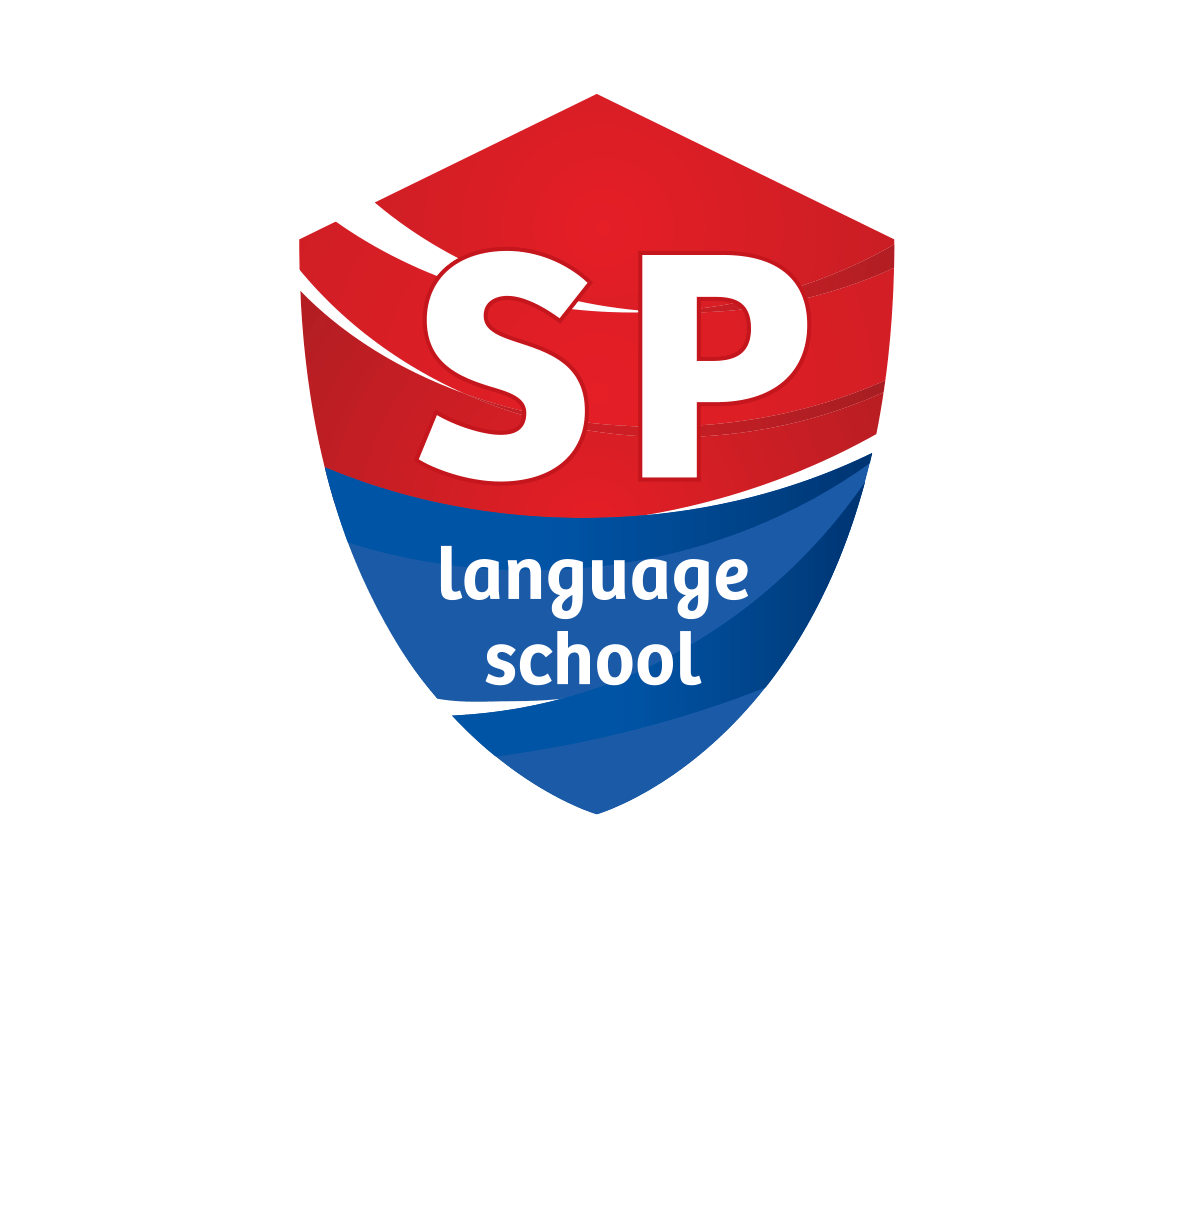 Papademetriou Language School